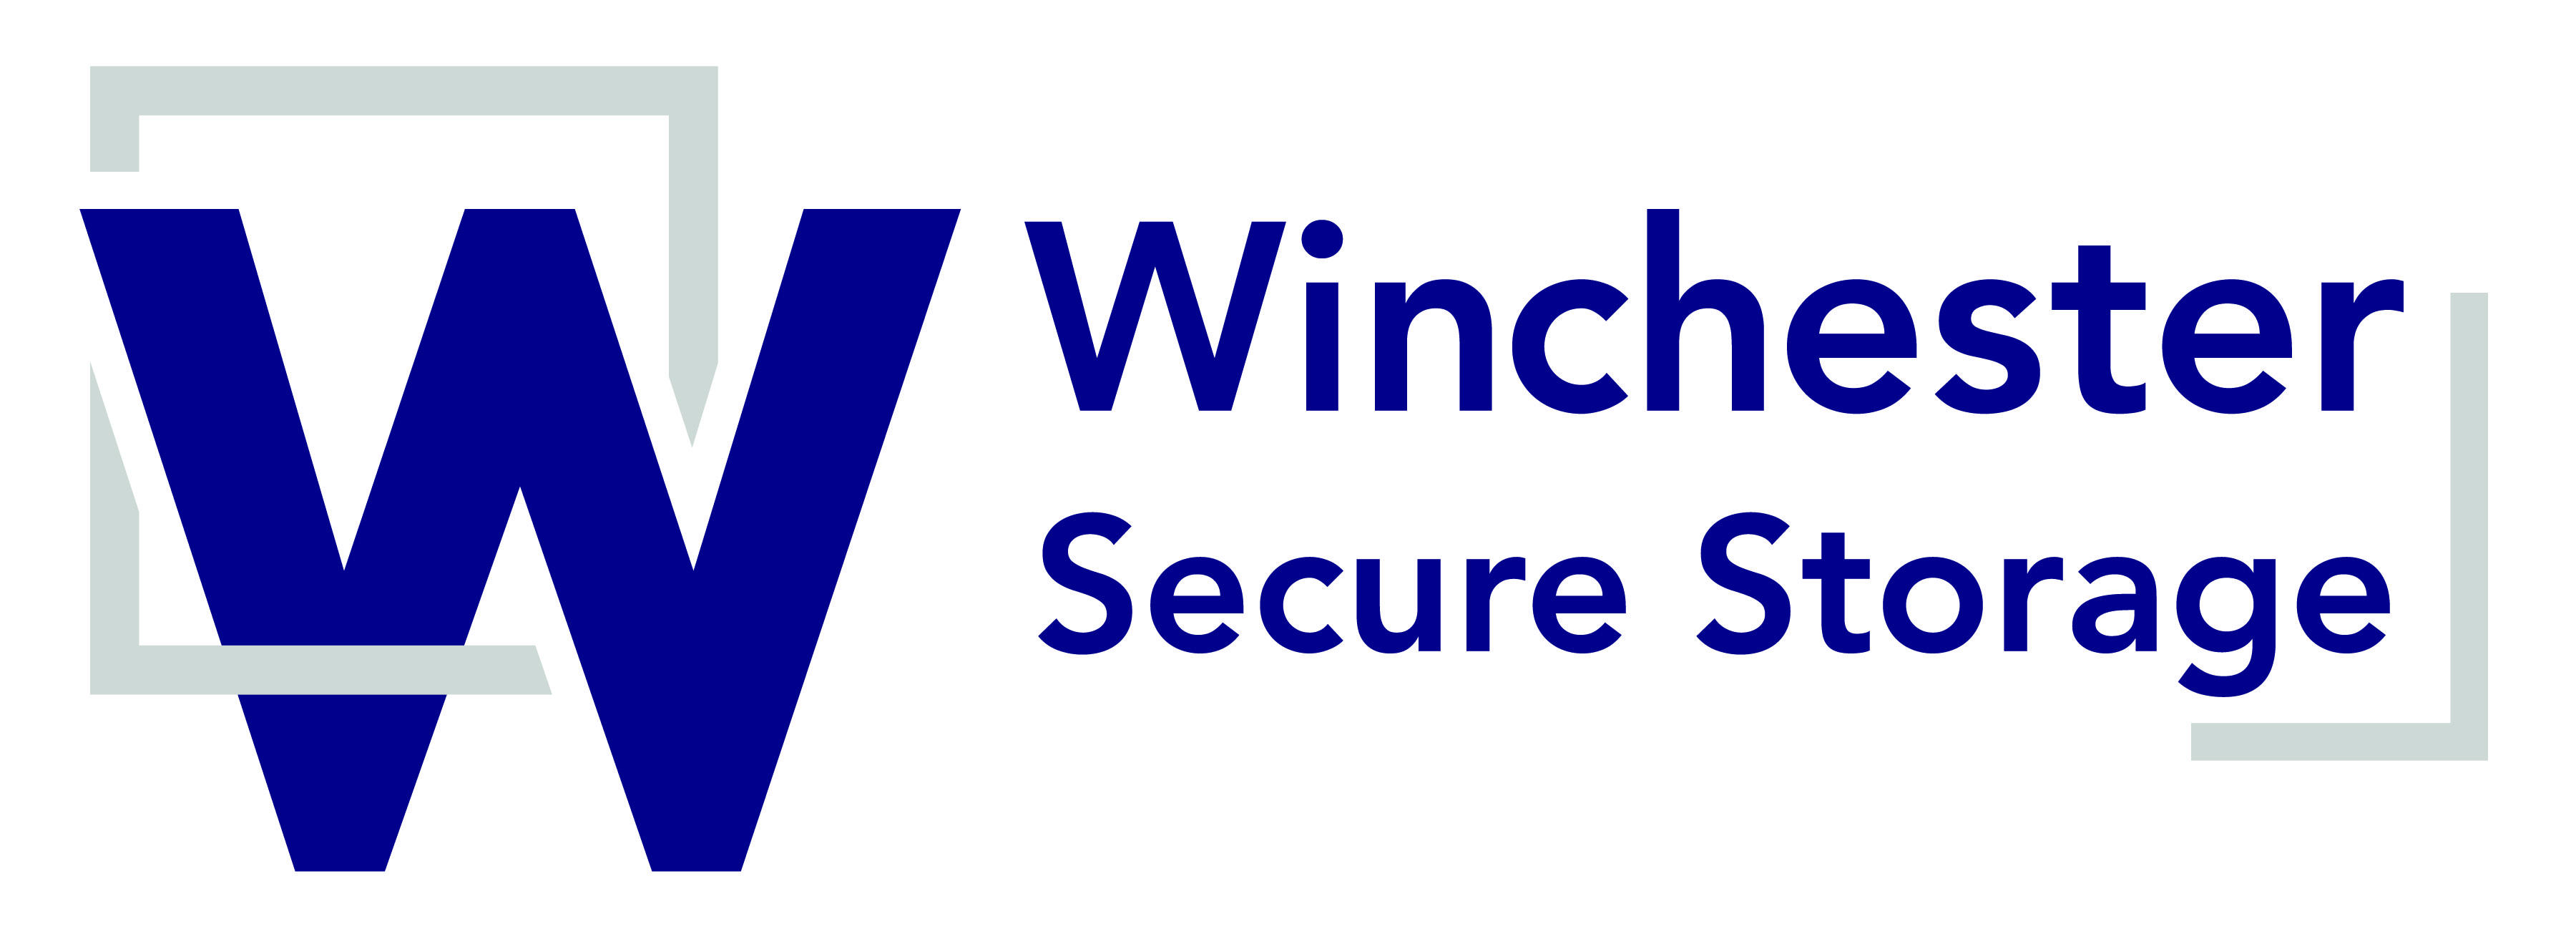 Winchester Secure Storage in Winchester, VA